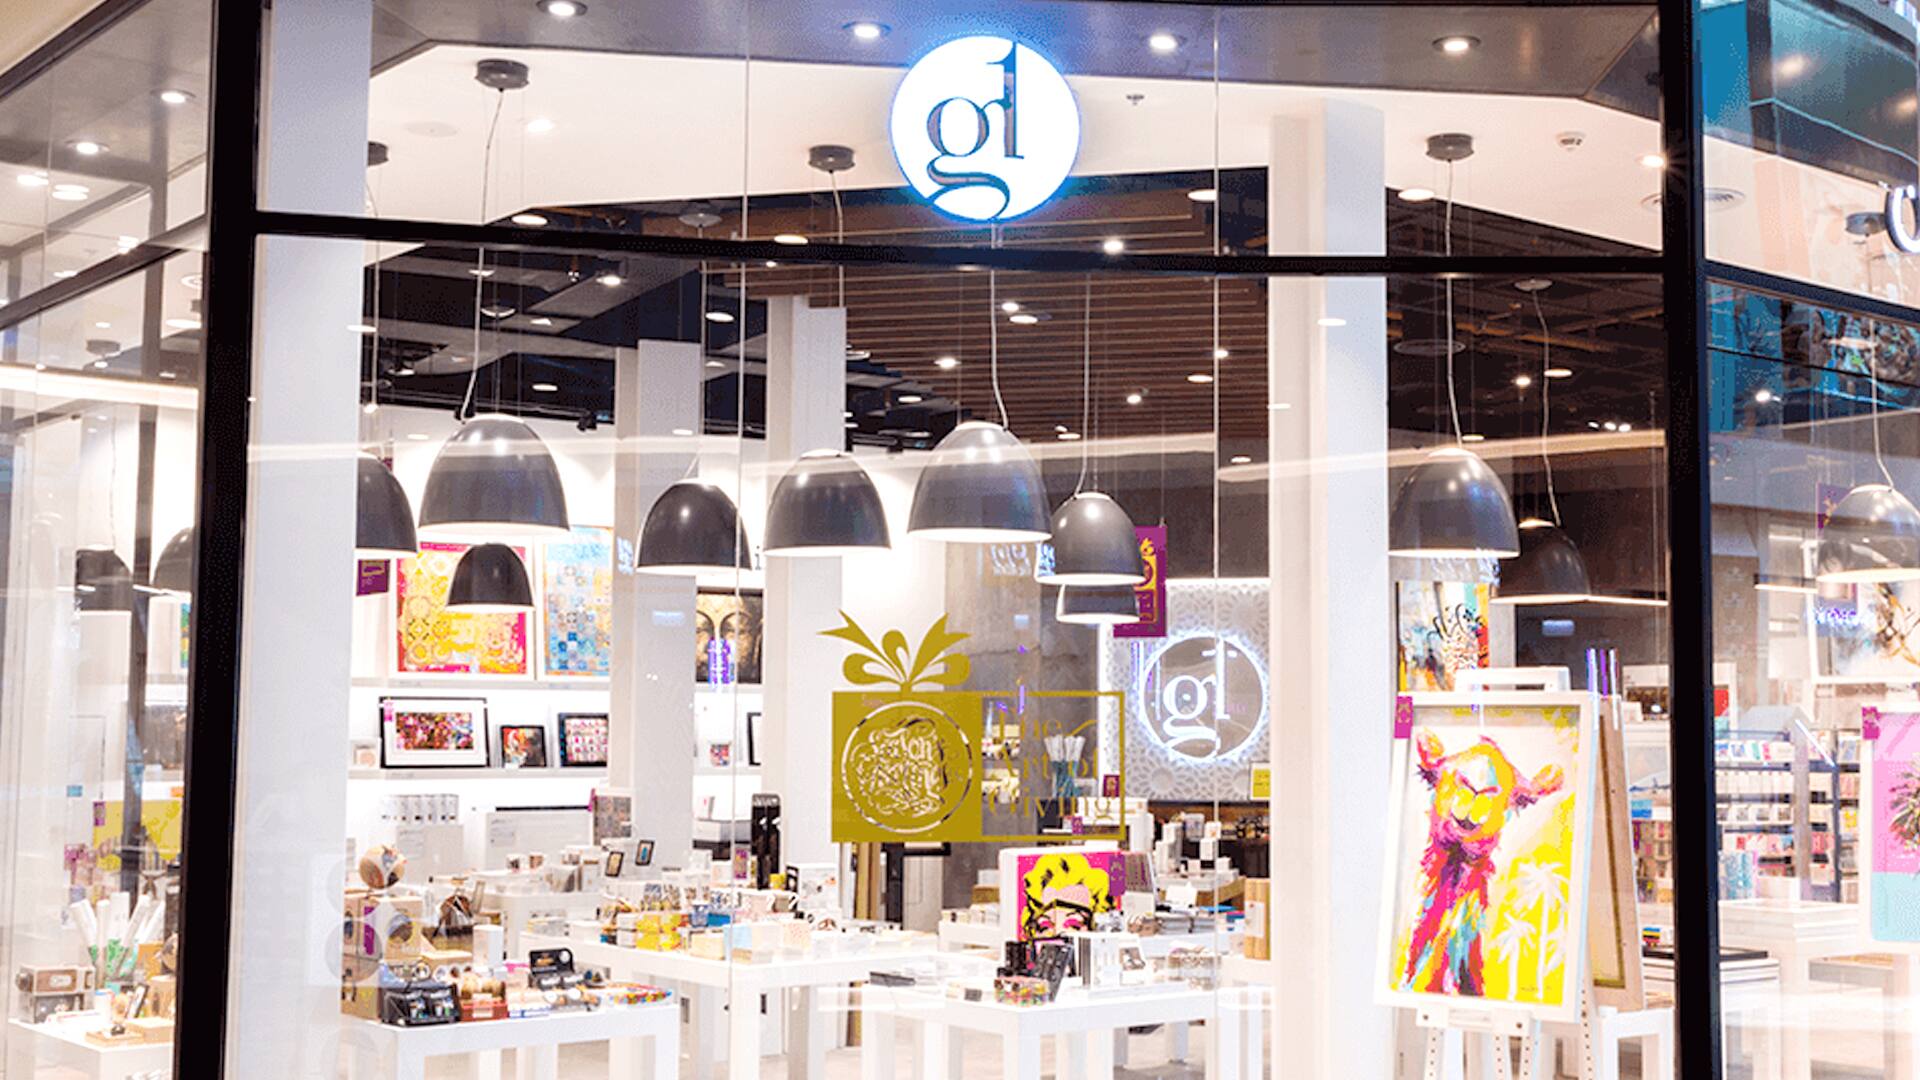 Gallery One | Art Gallery and Shop in Dubai | Visit Dubai